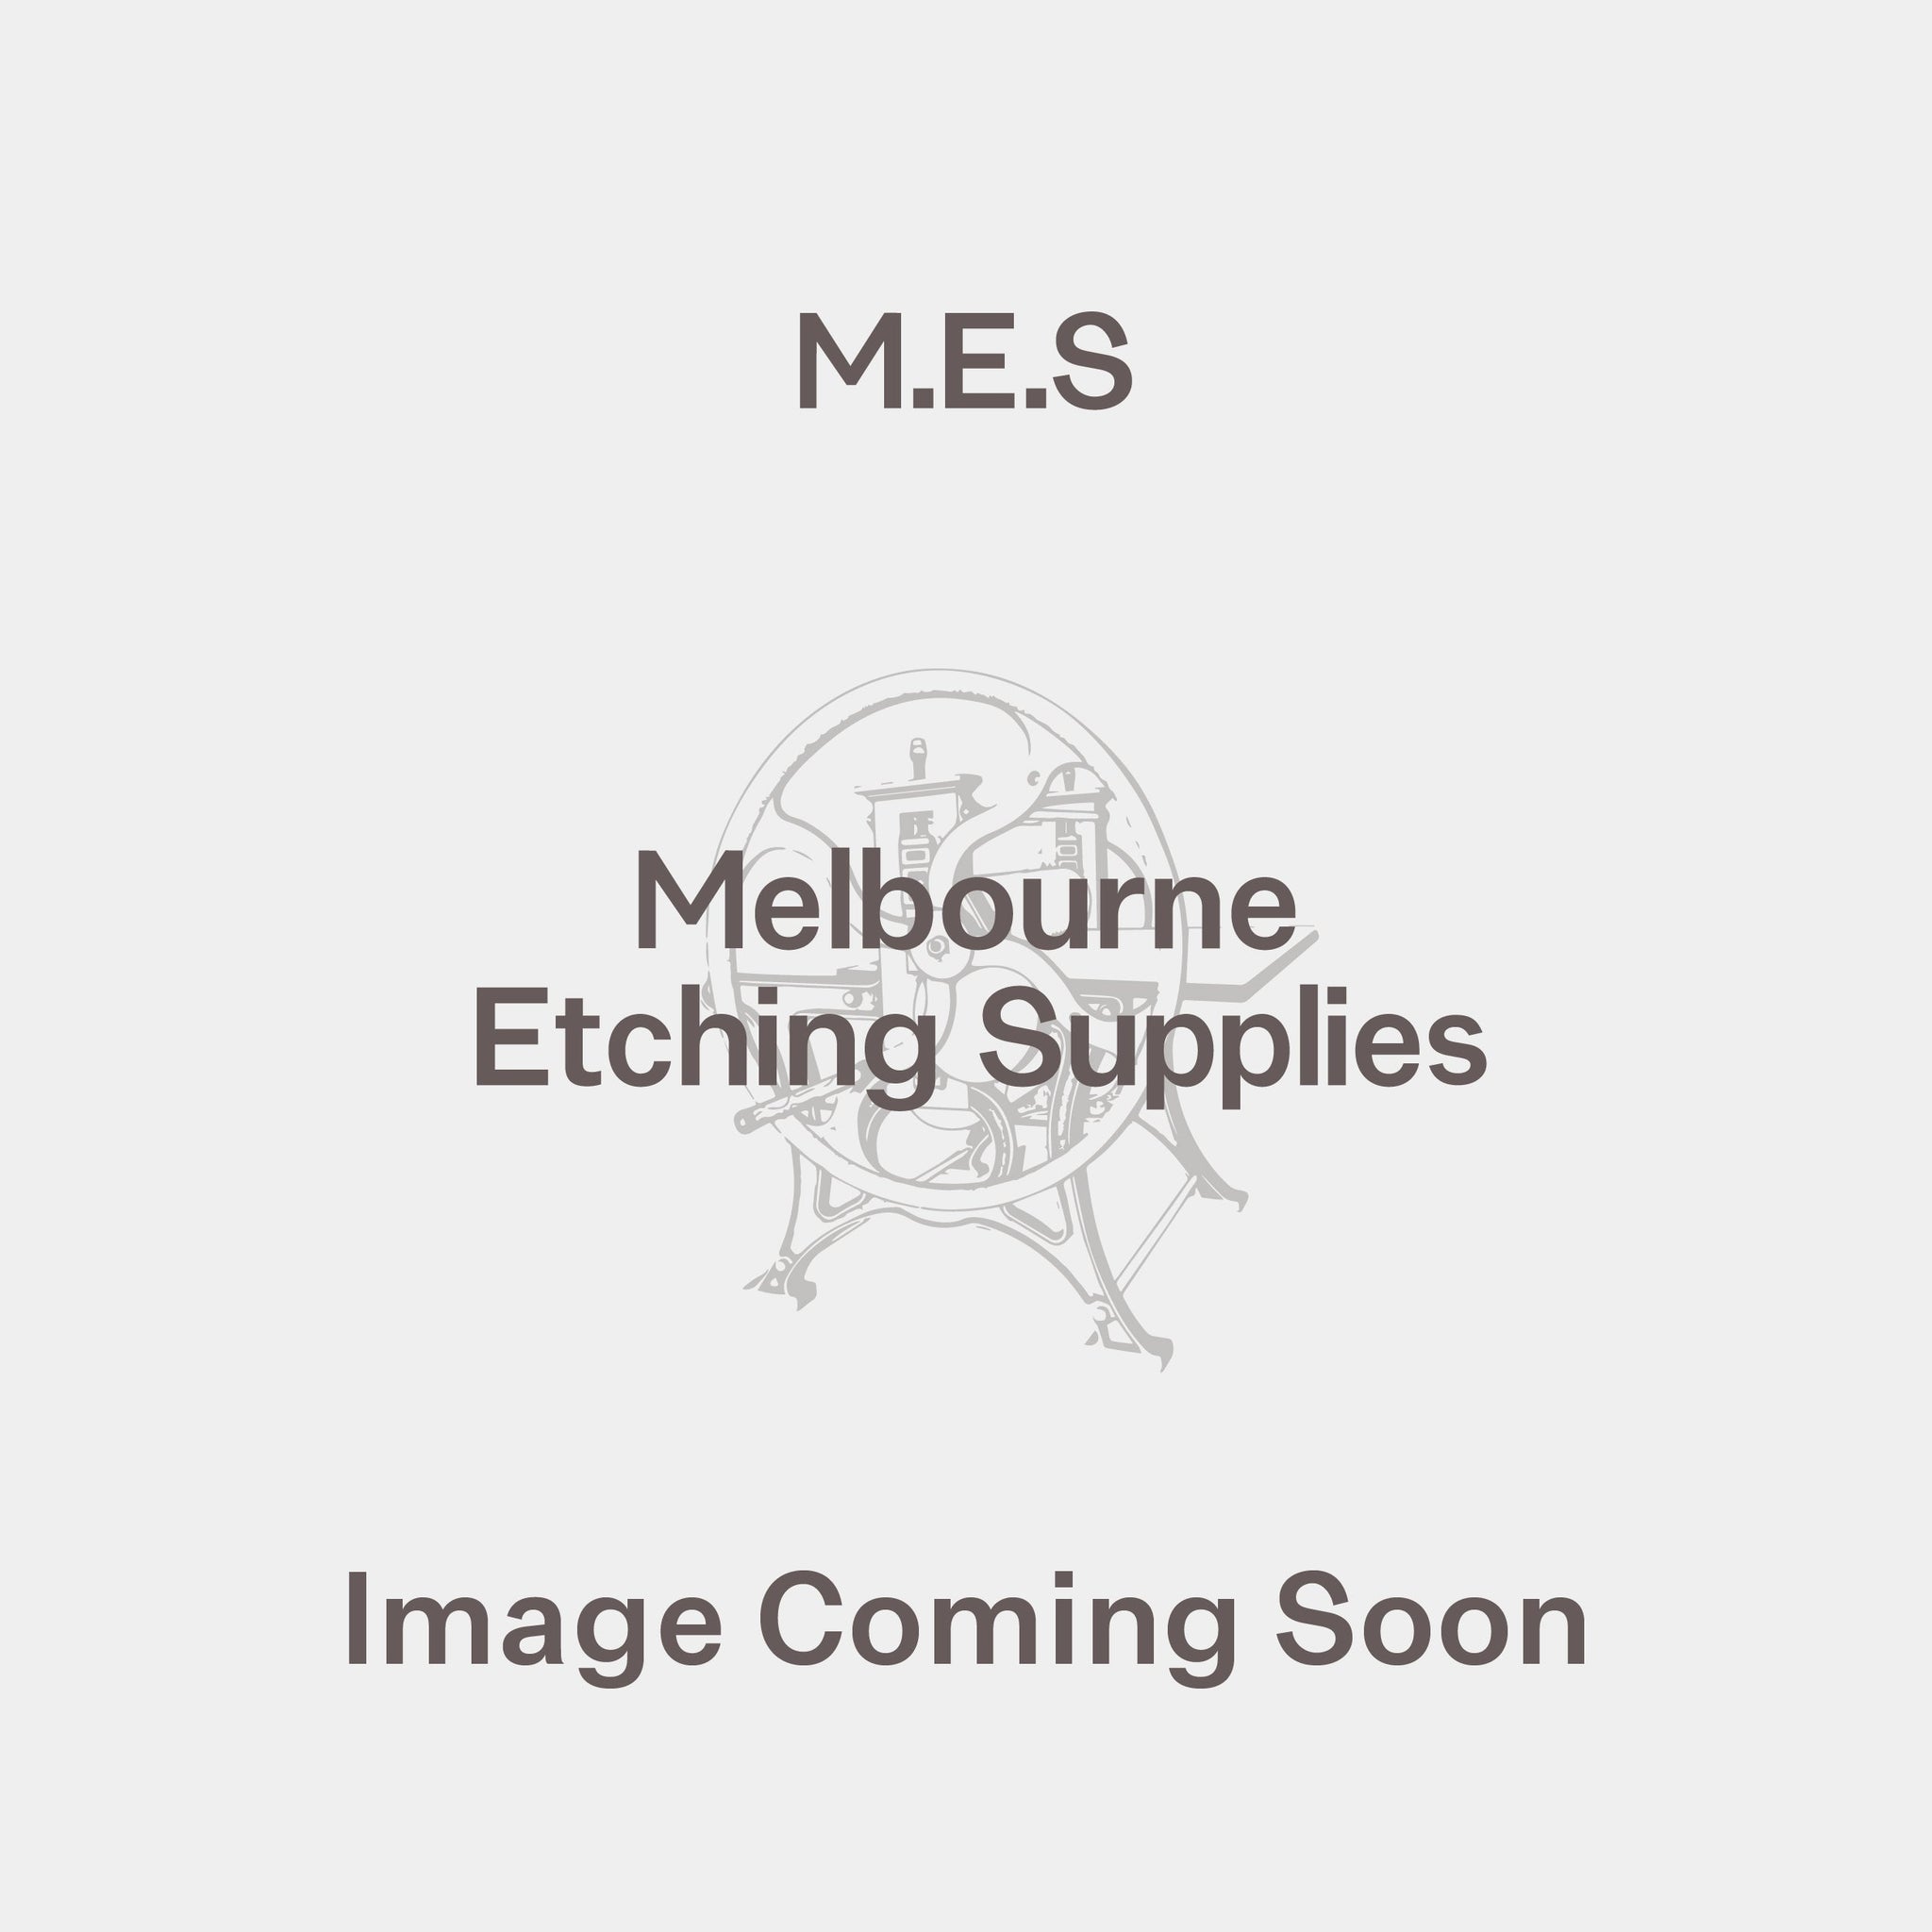 Prismocolor Lead Pk of 12 - Melbourne Etching Supplies